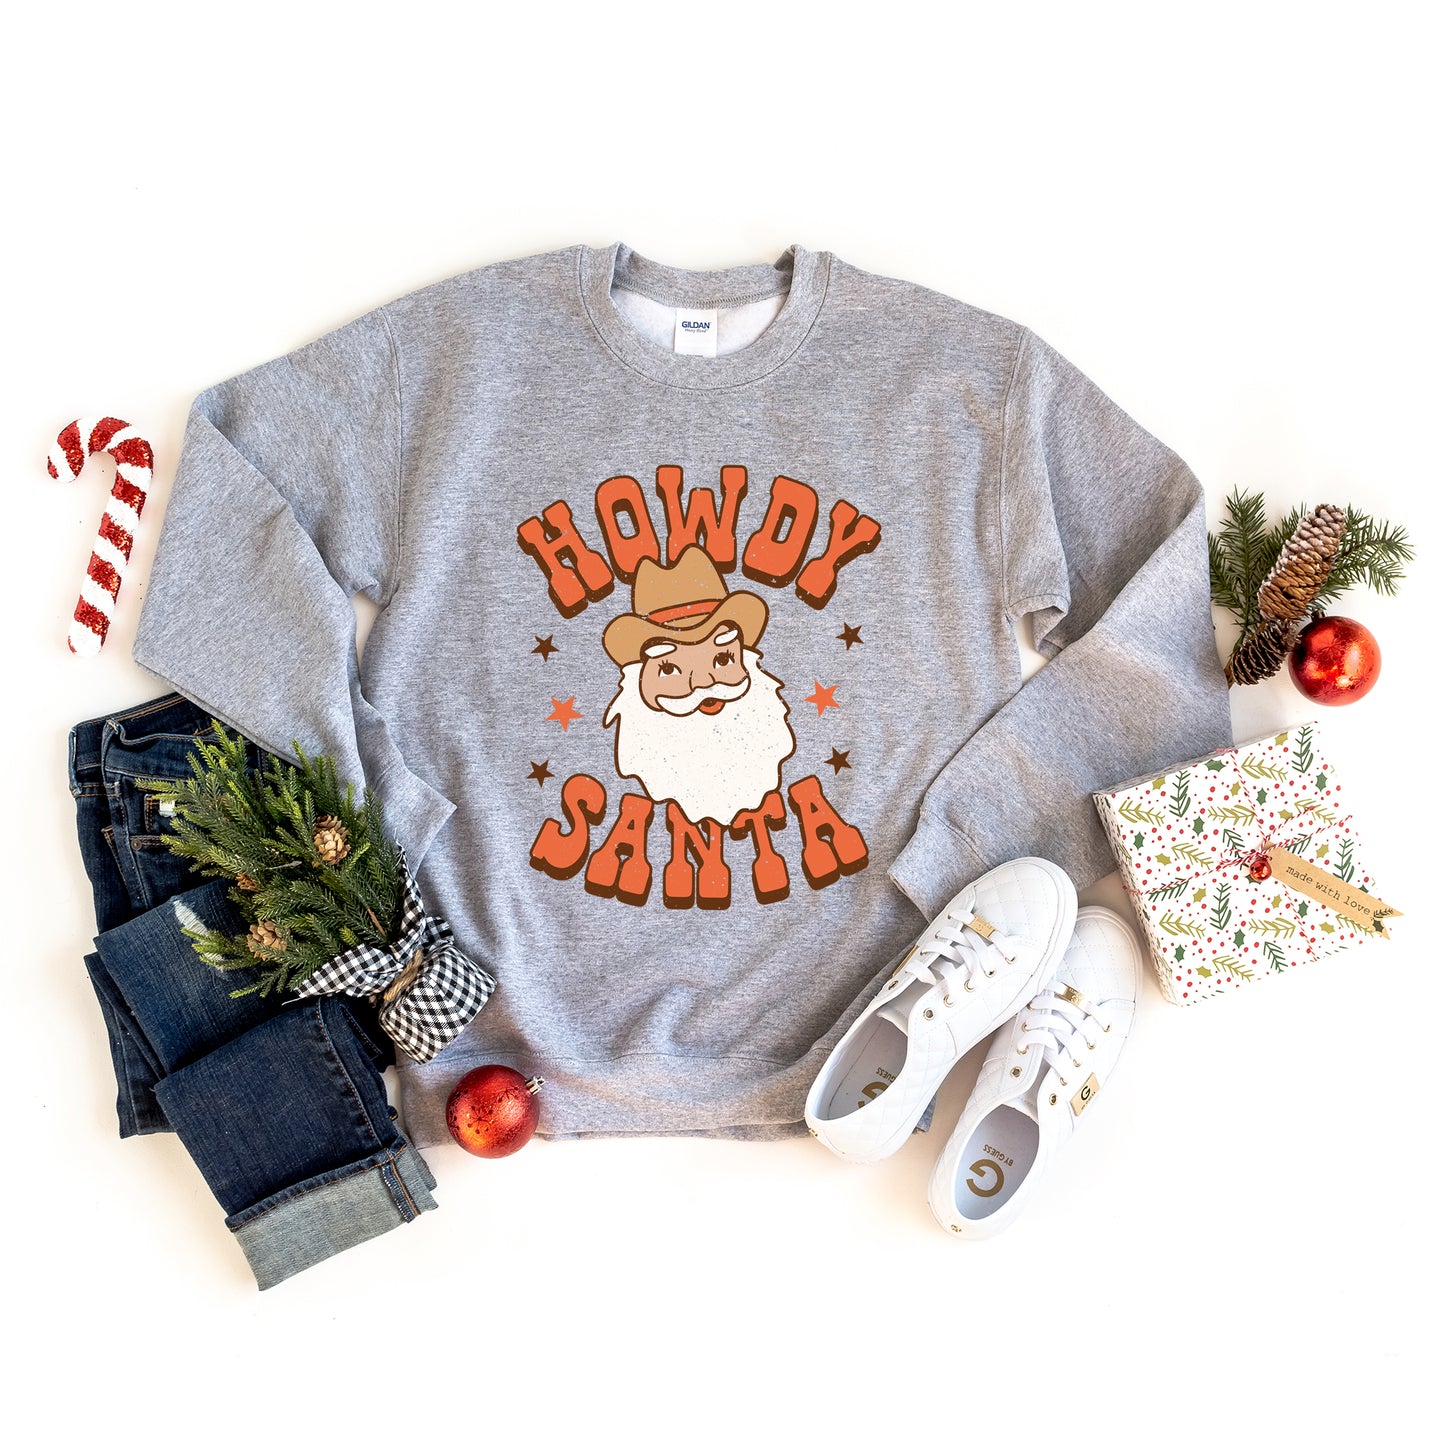 Retro Howdy Santa | Sweatshirt